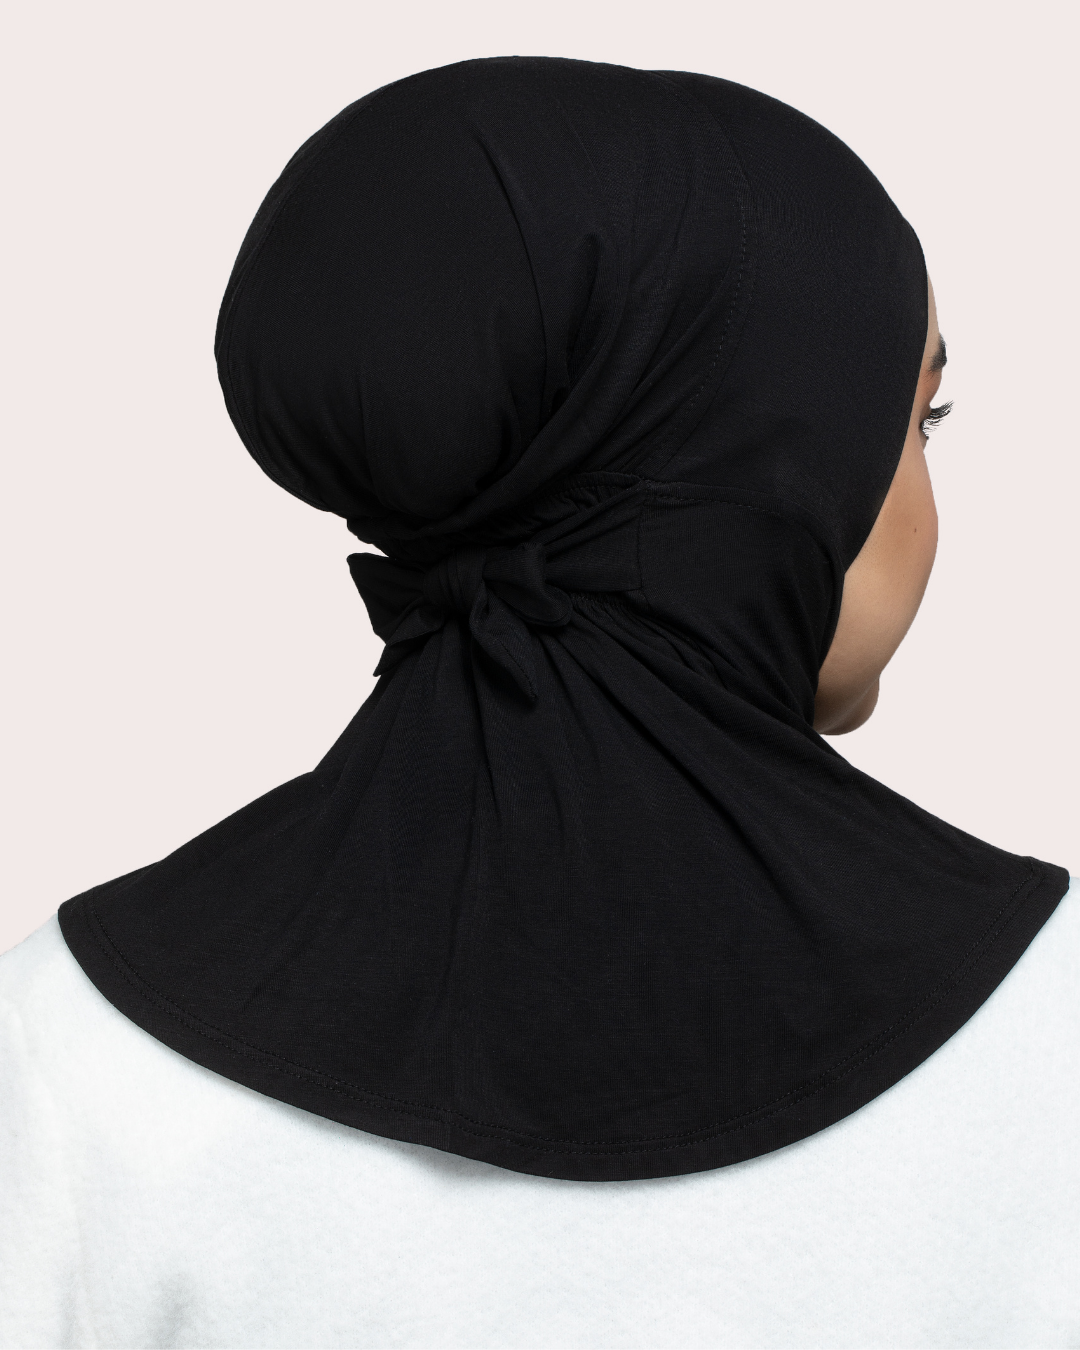 Full Coverage Underscarf - Black - Honey Hijabs,   - Luxury Haute Hijabs, Honey Hijabs - Honey Hijabs 